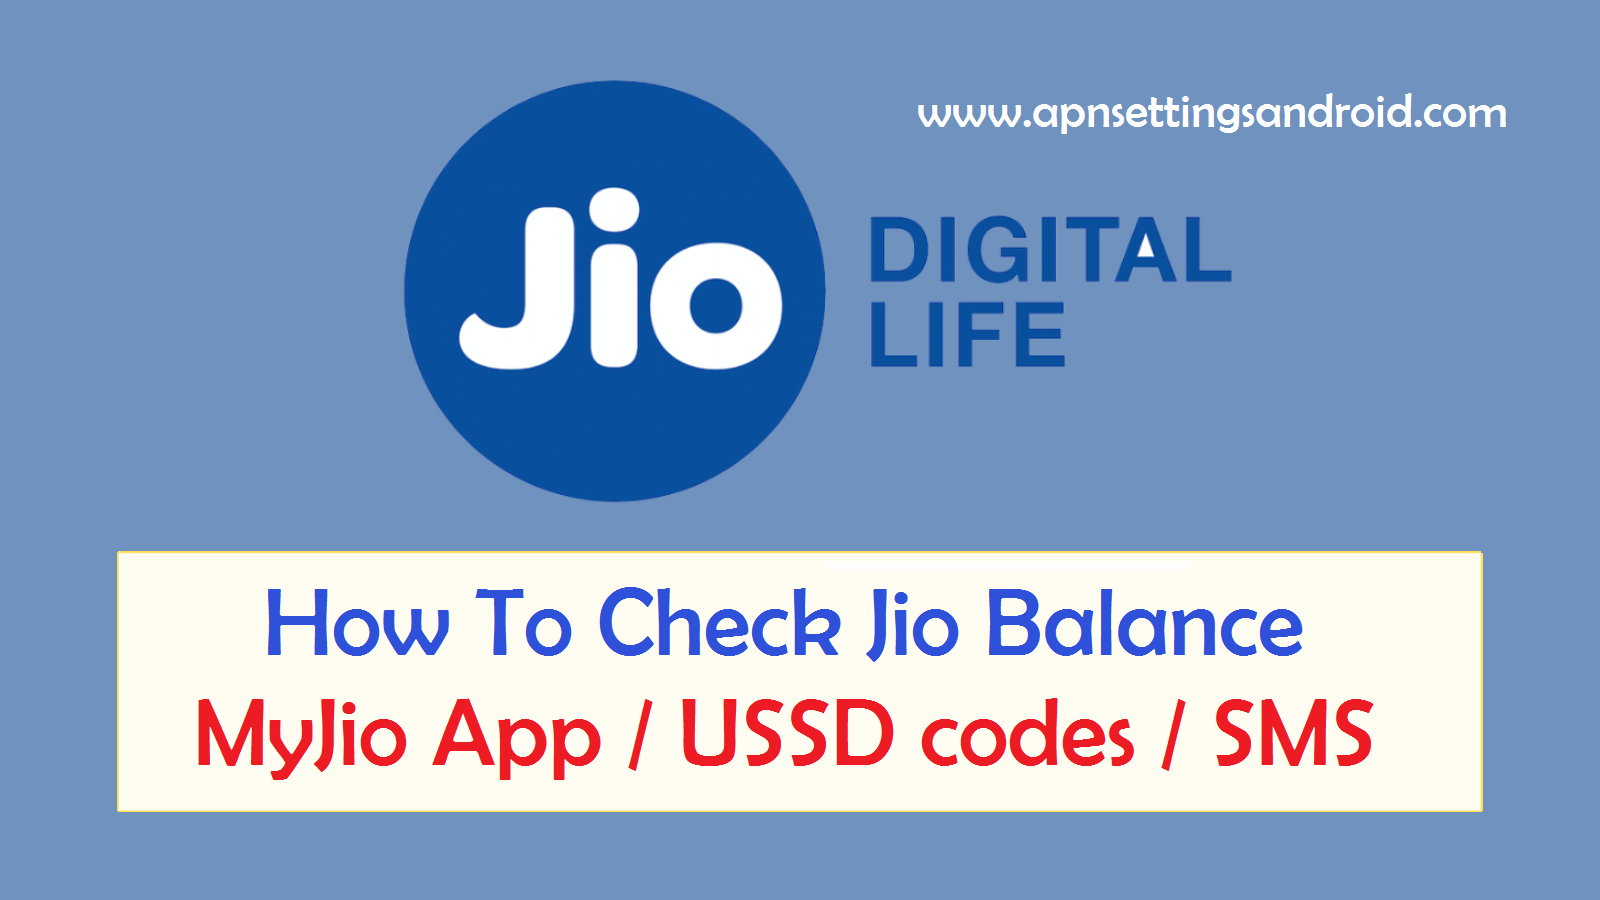 How To Check jio Balance 